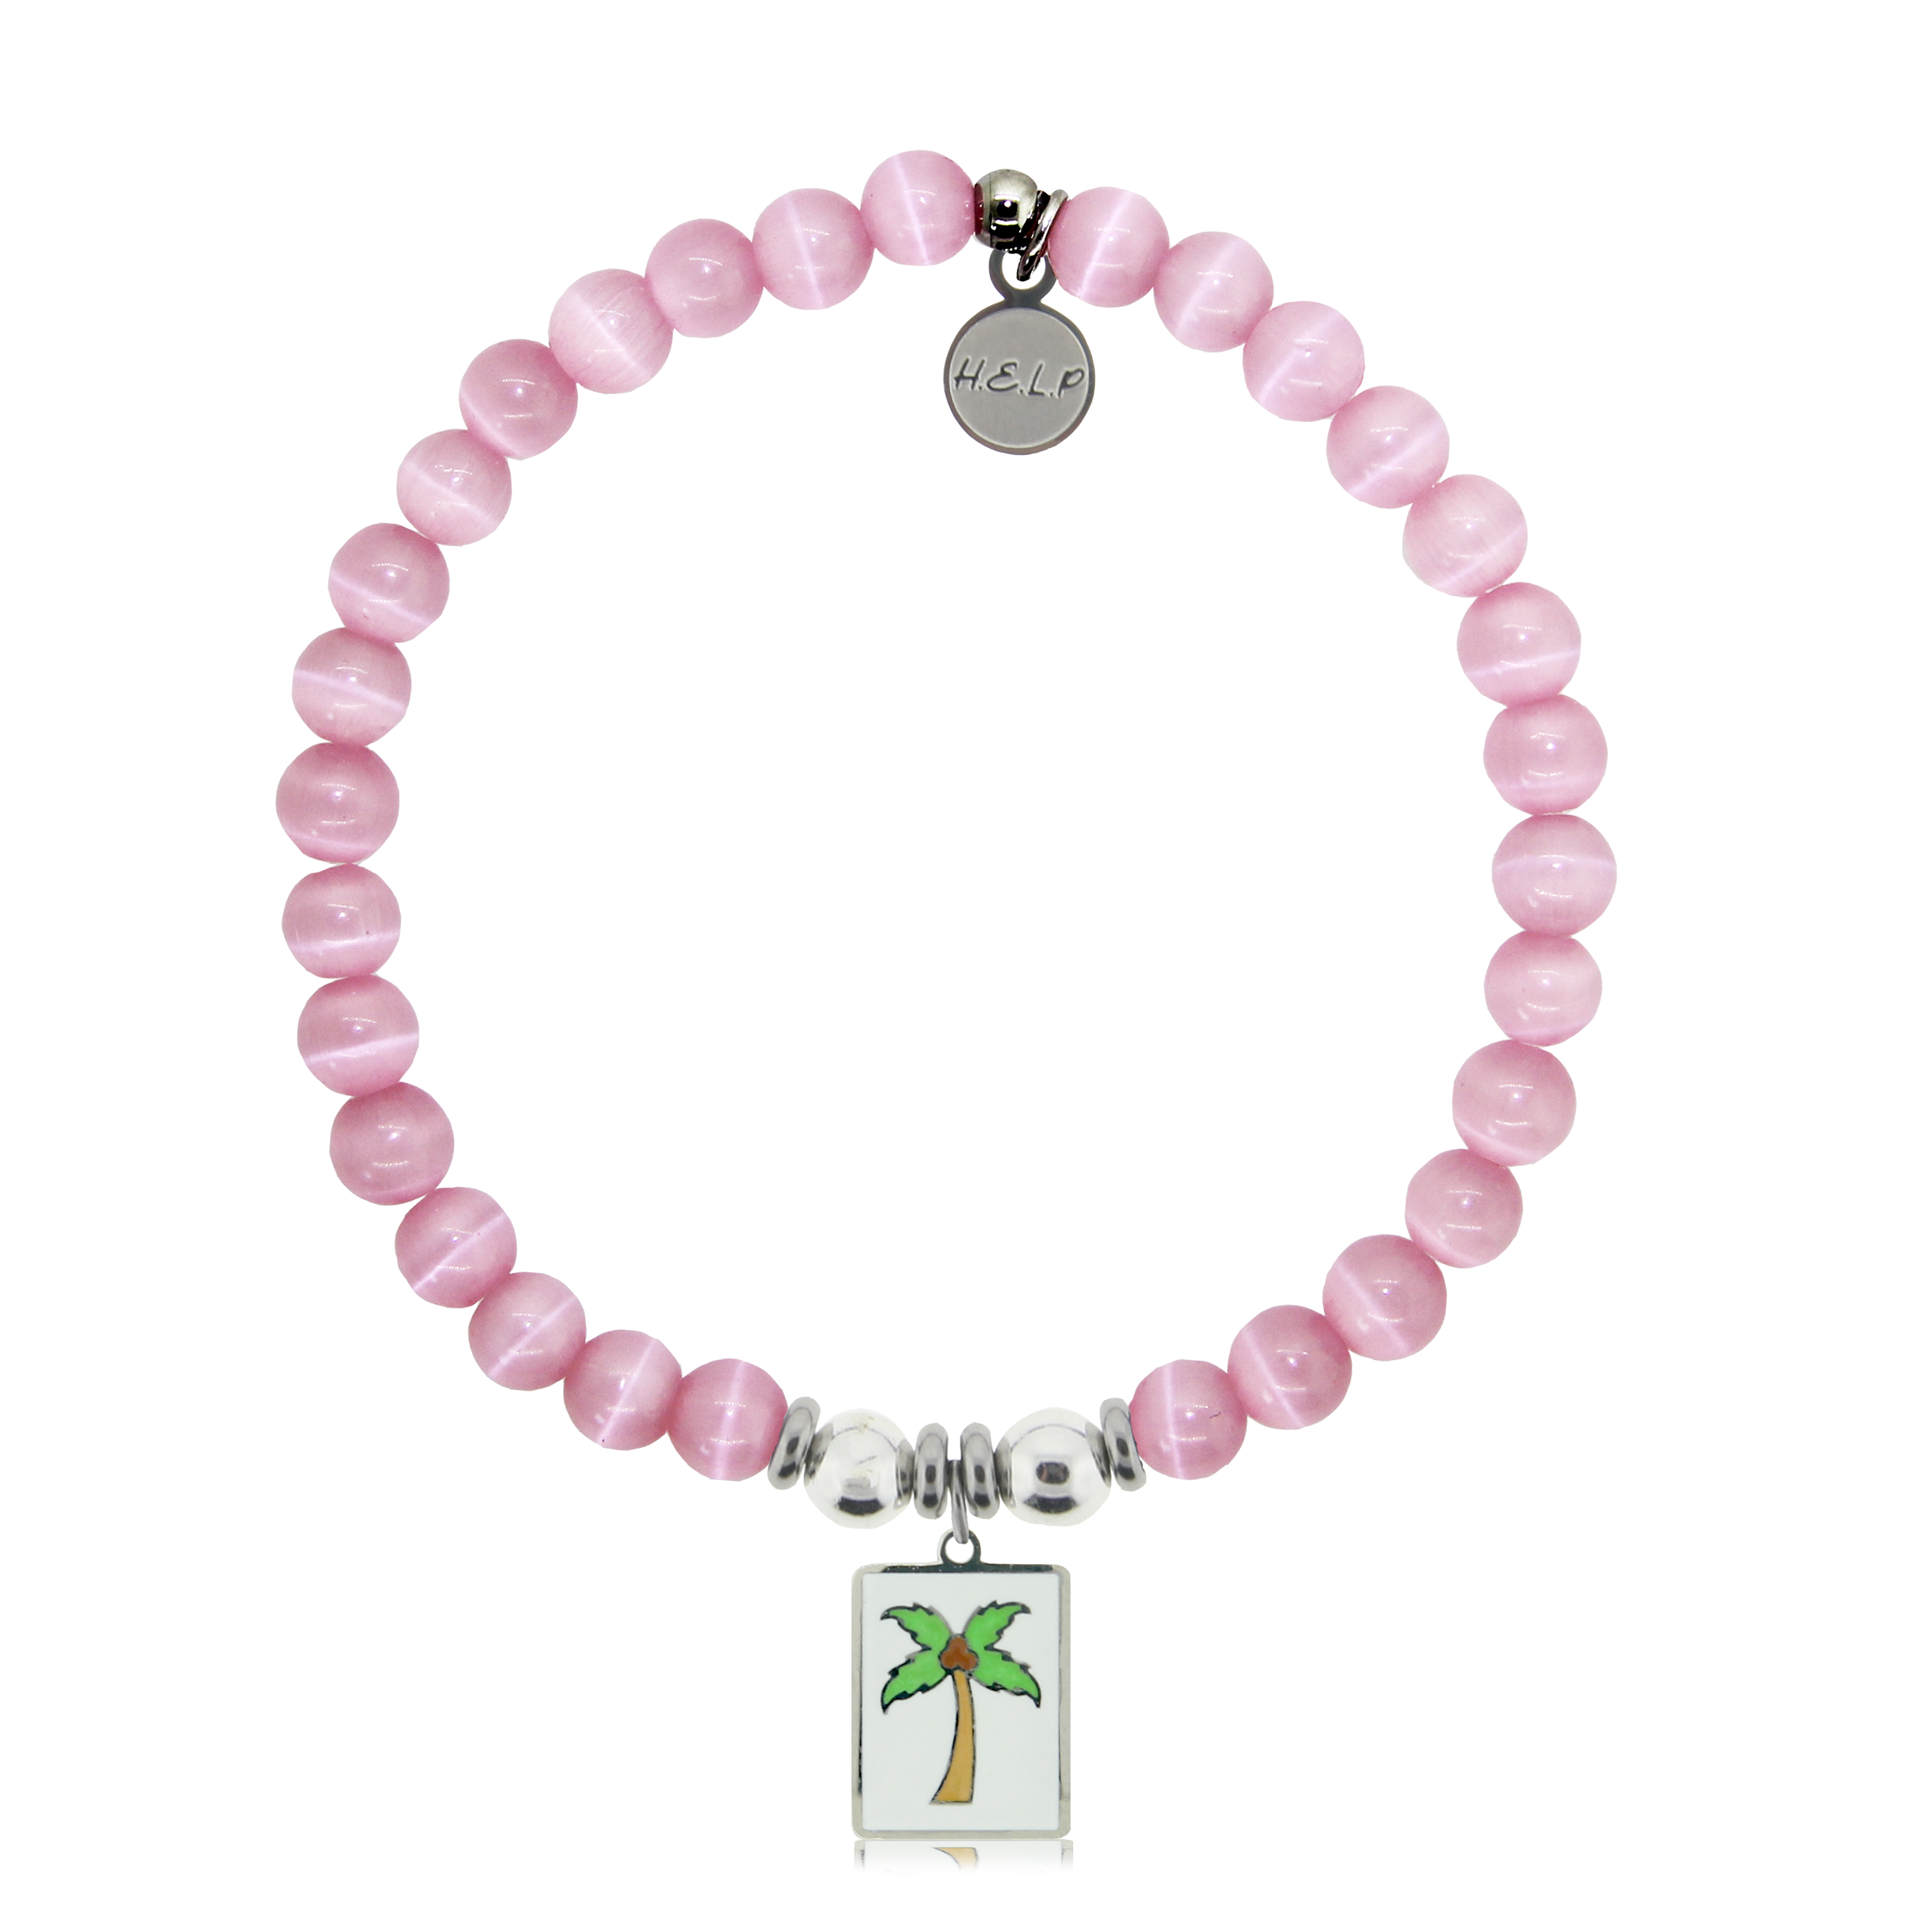 HELP by TJ Palm Tree Enamel Charm with Pink Cats Eye Charity Bracelet